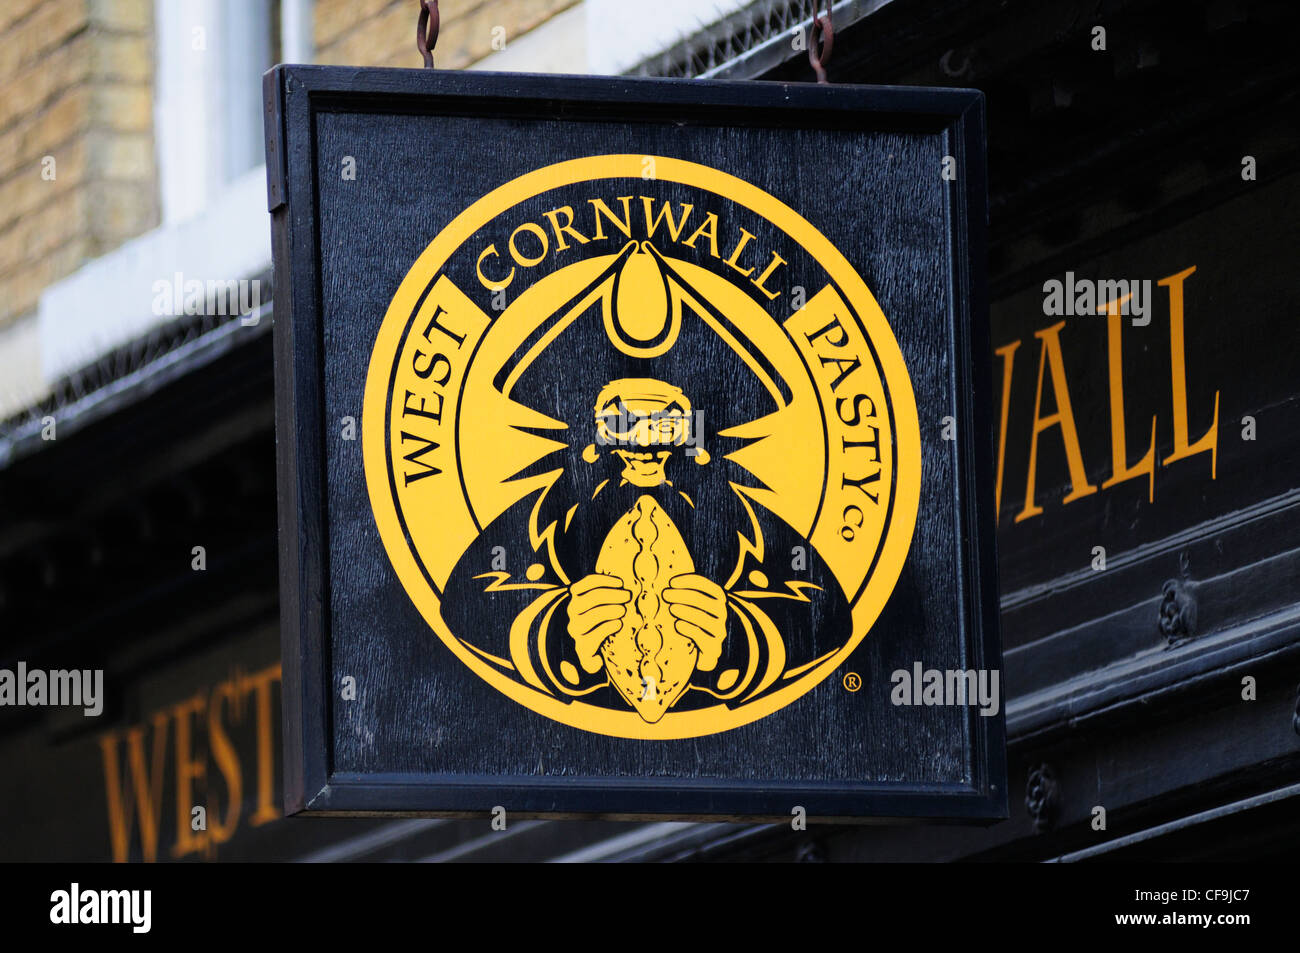 West Cornwall Pasty Co Sign, Rose Crescent, Cambridge, England, UK Stock Photo